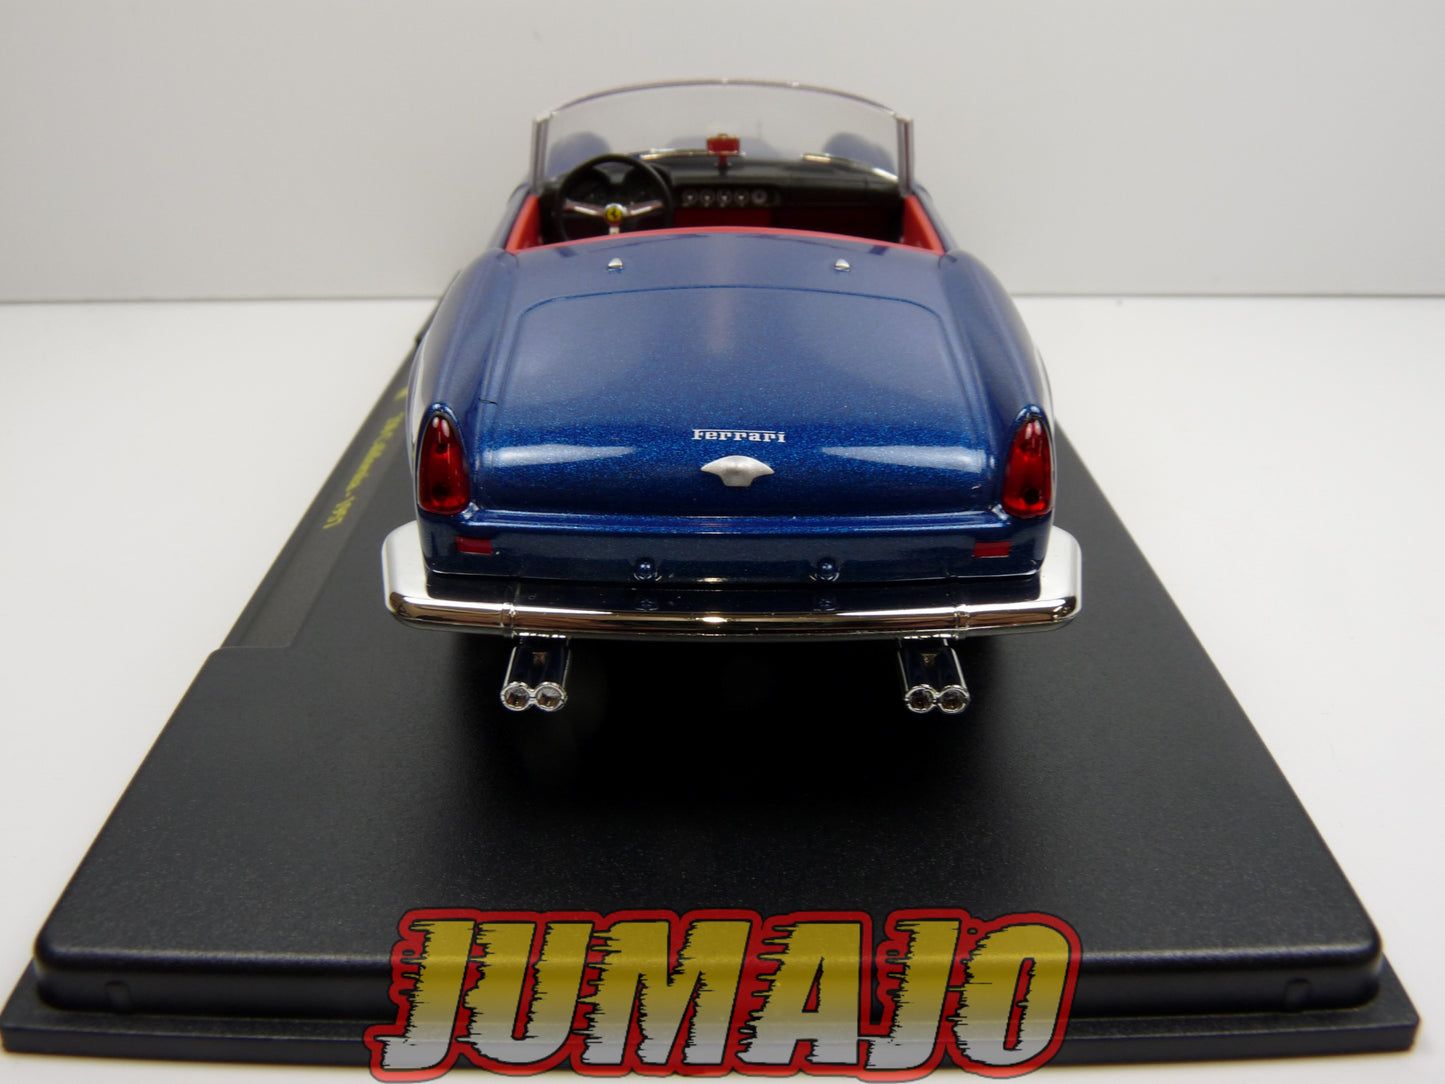 FVQ9 Voiture 1/24 BURAGO HACHETTE FERRARI GT : 250 California 1957 Bleue